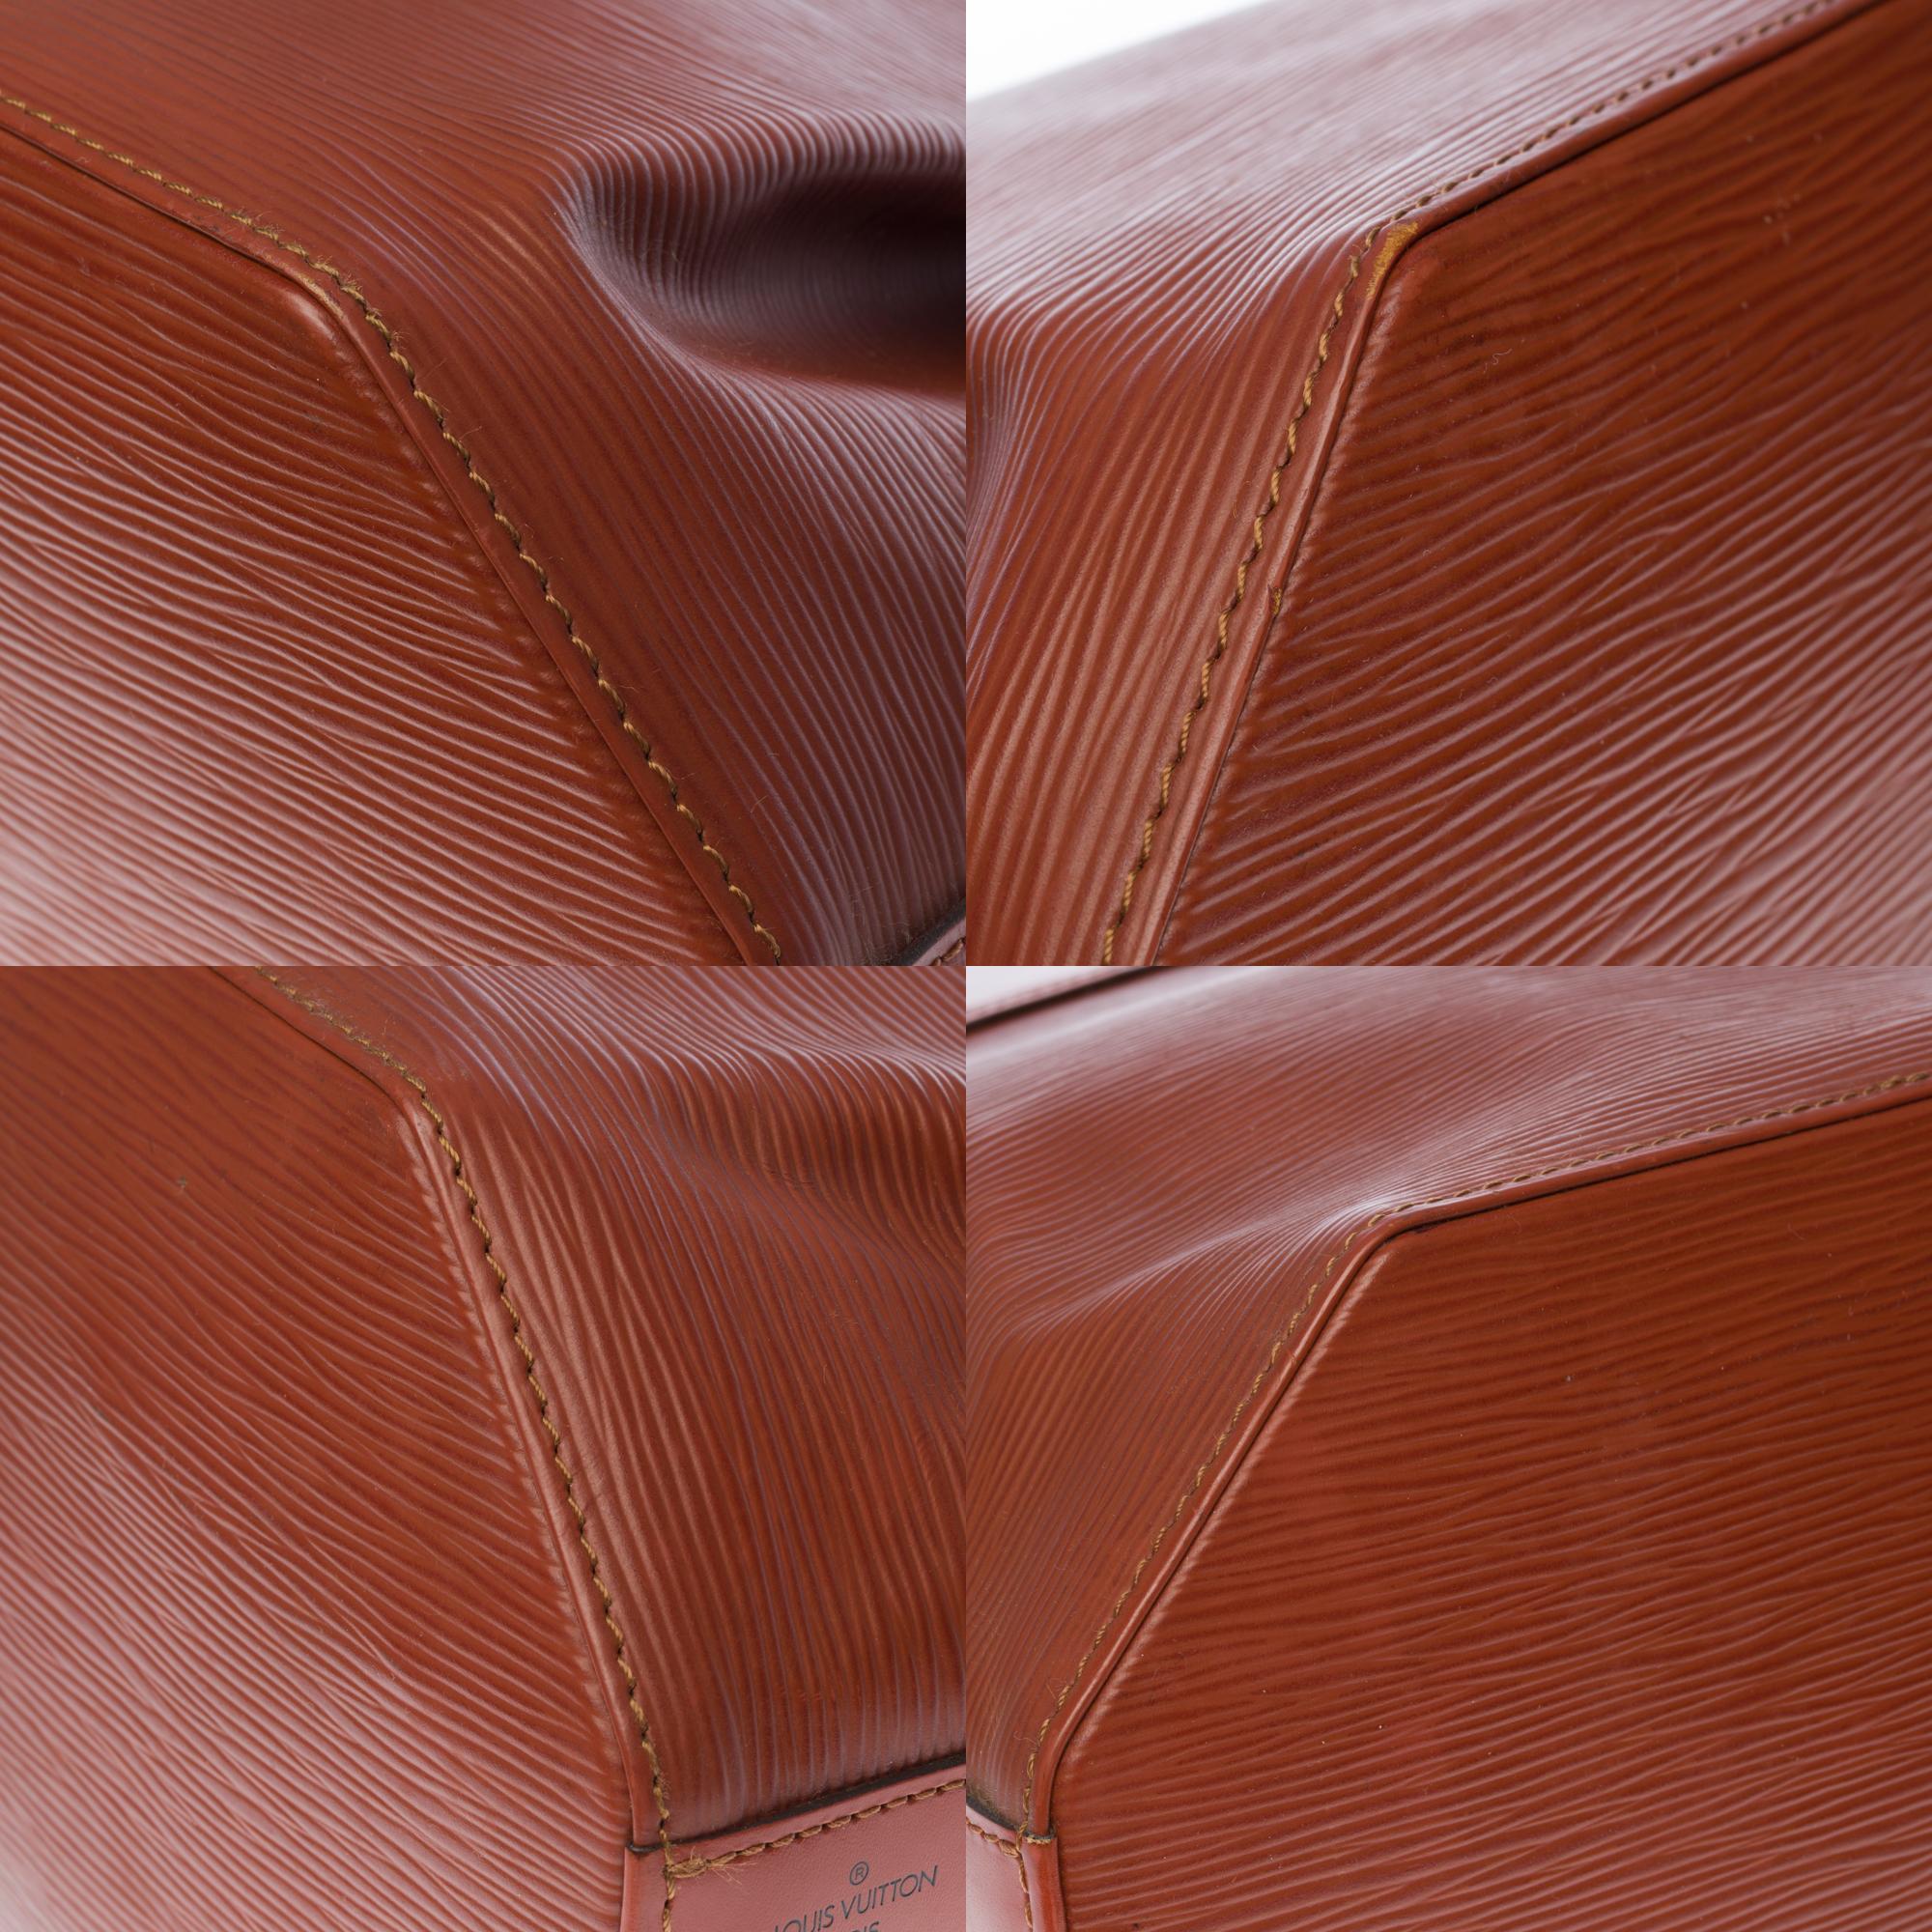 Louis Vuitton Sac d'épaule Backpack in brown épi leather, GHW 2